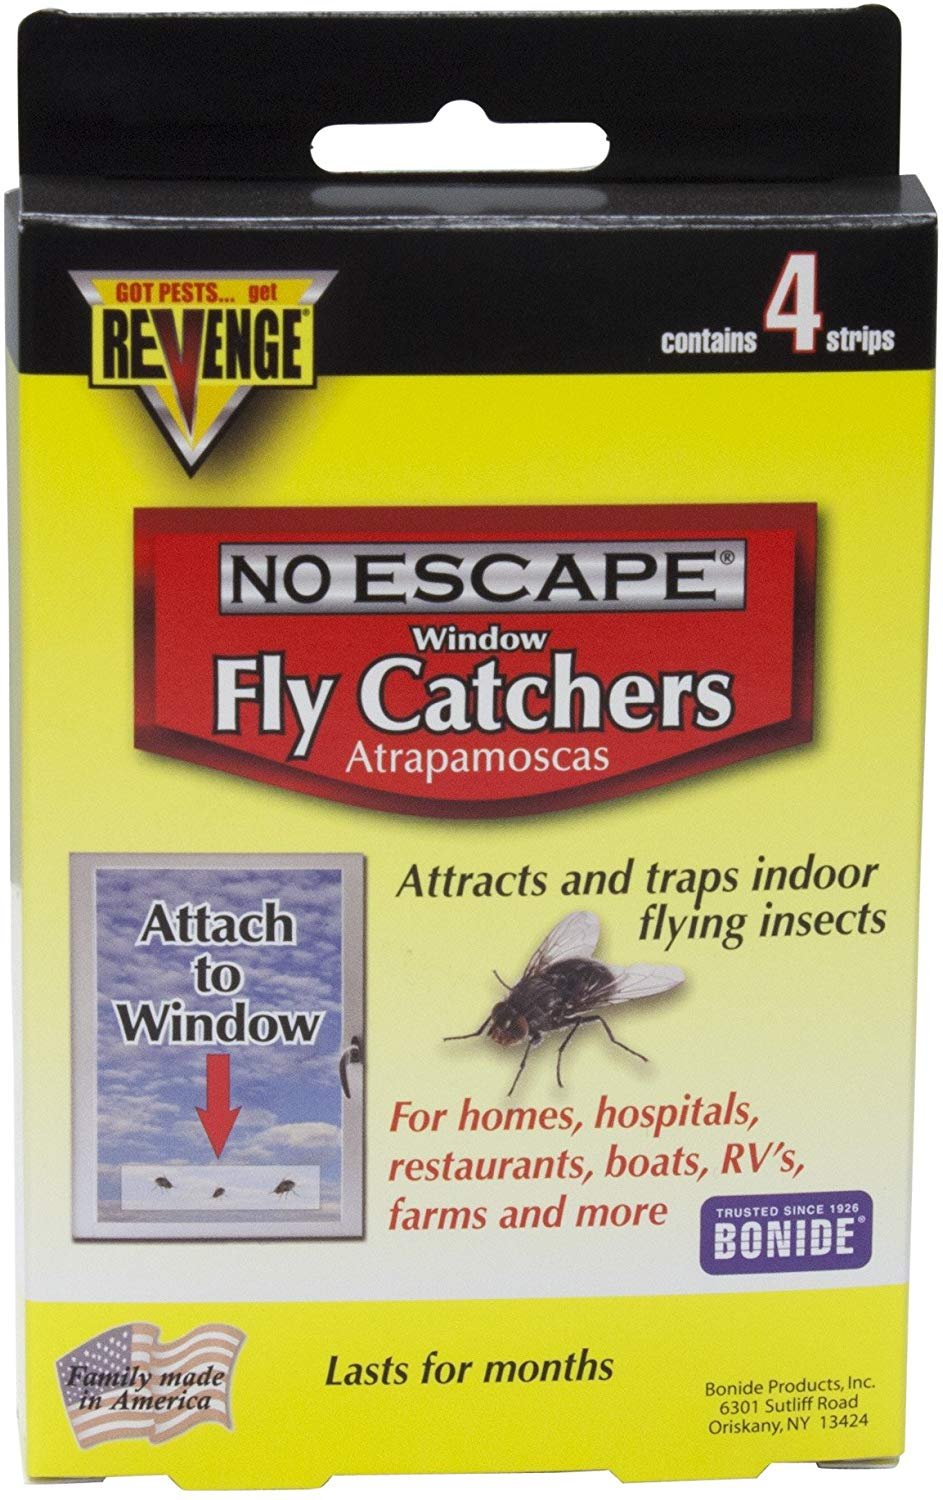 Revenge Window Fly Catchers - 1 Box (4 Strips)